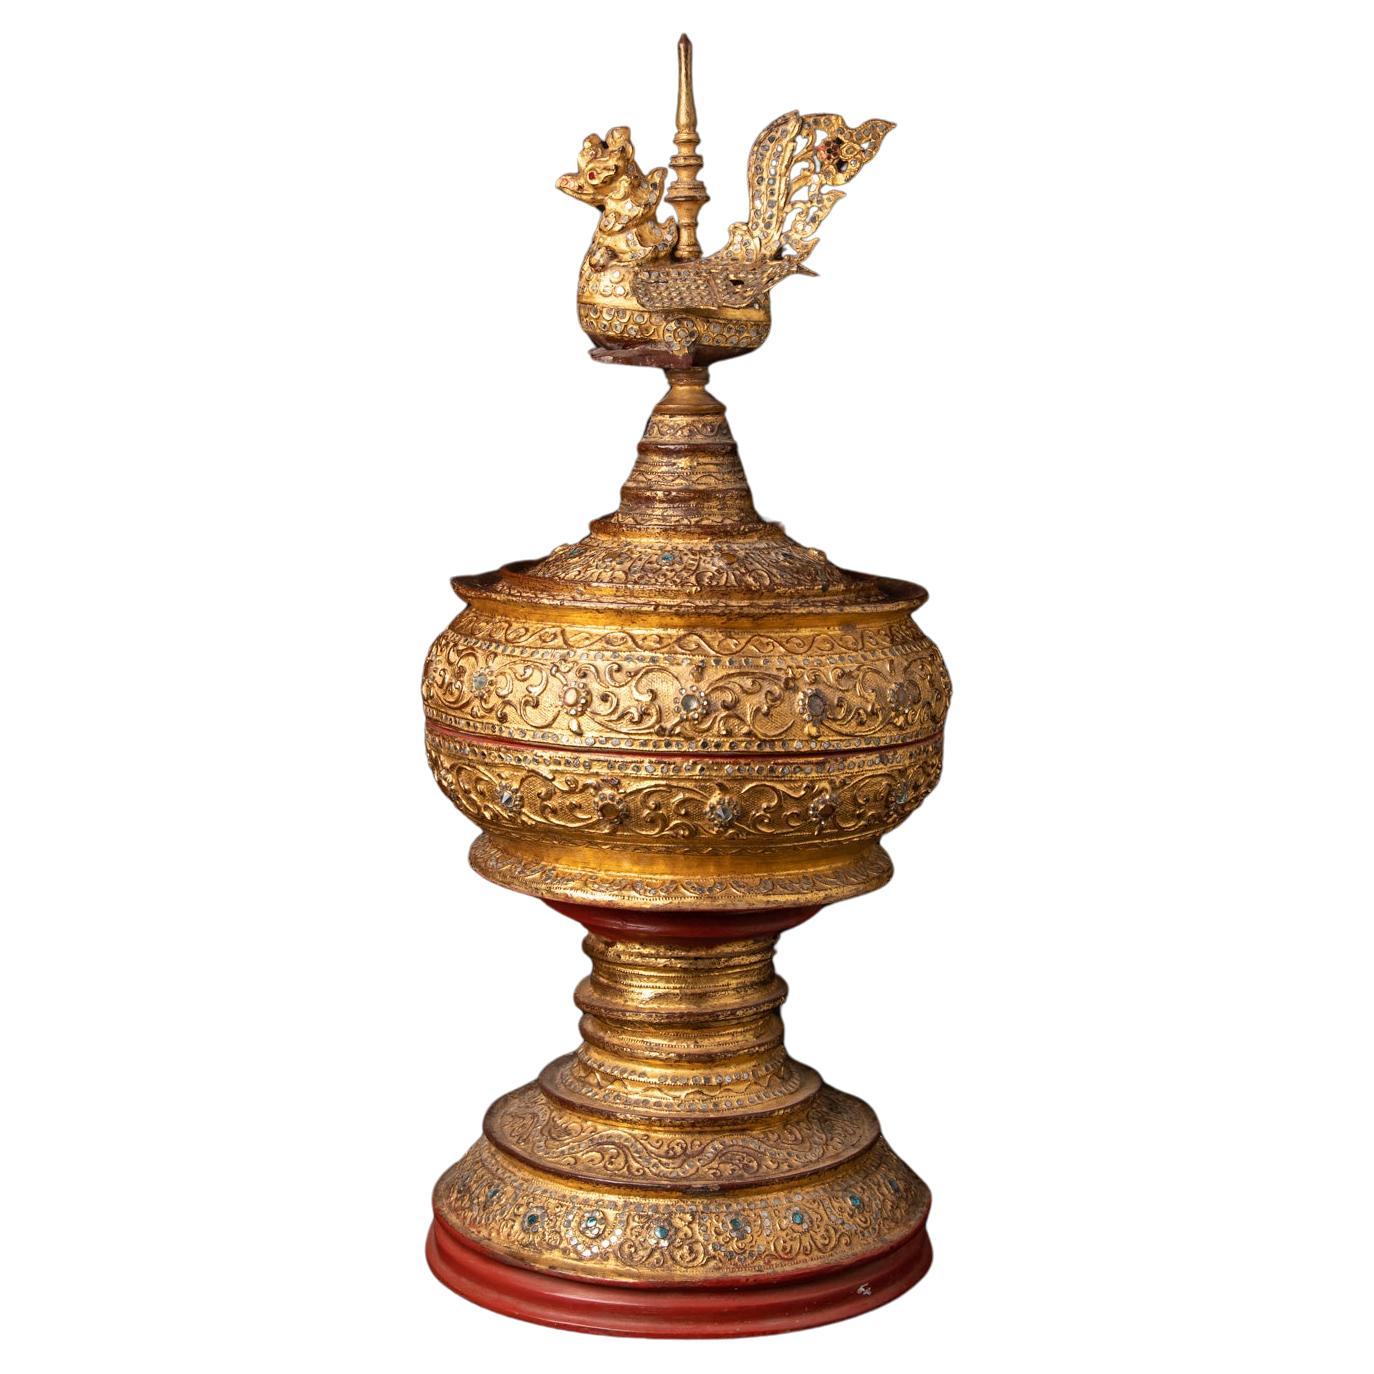 Antique gilded Burmese offering vessel from Burma - Original Buddhas